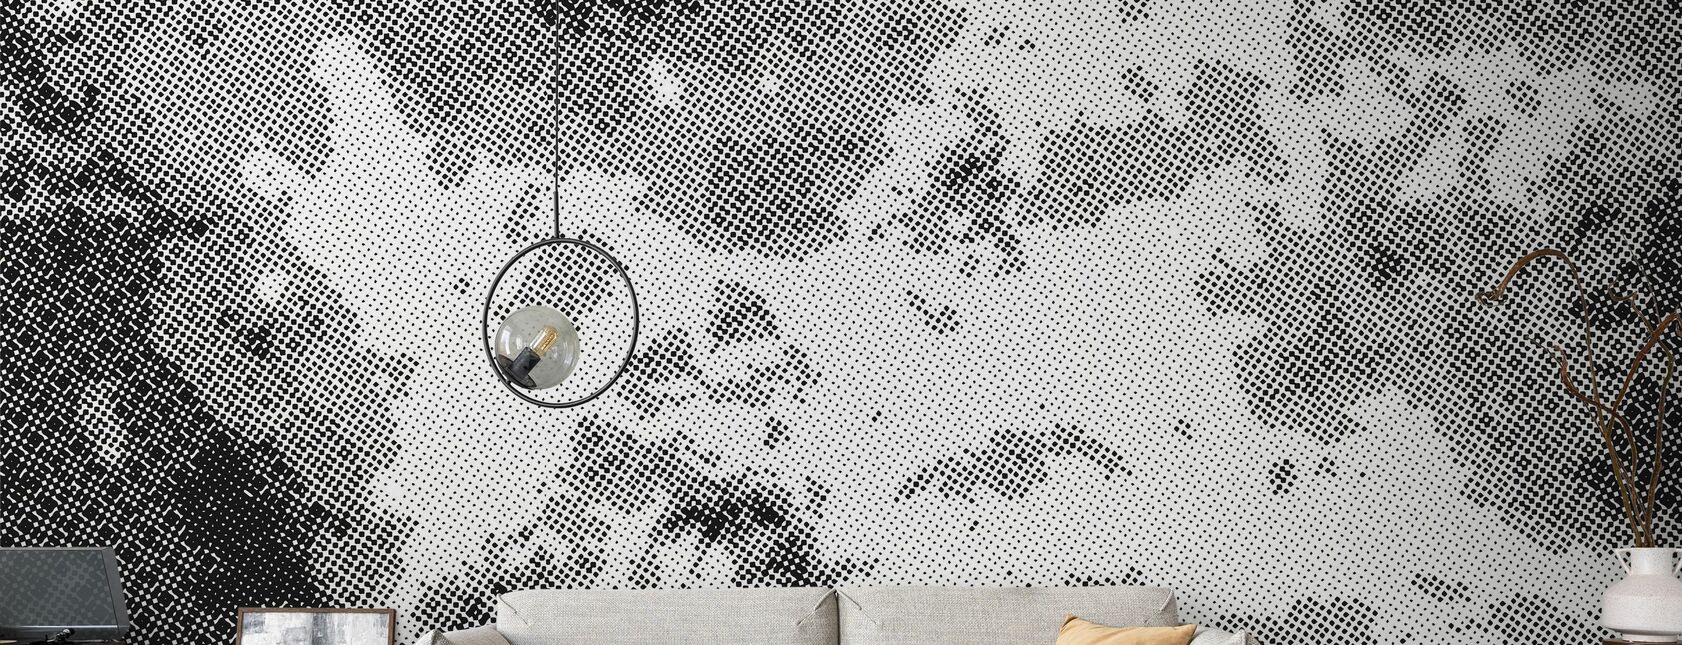 Final Frontier Nebula Two - Wallpaper - Living Room